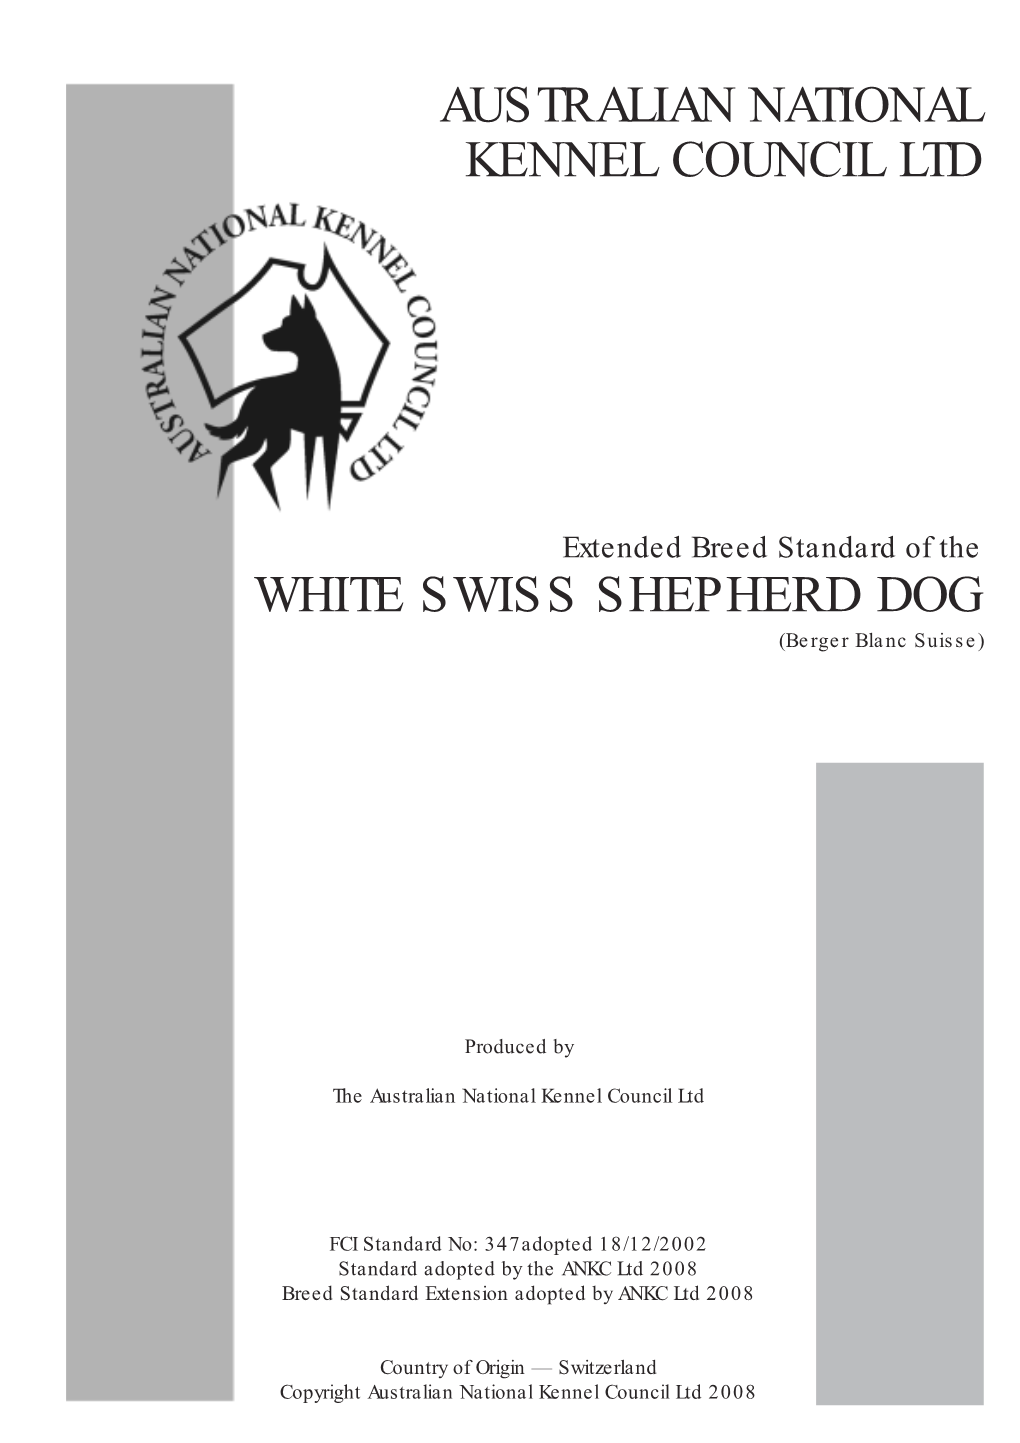 White Swiss Shepherd Dog Breed Standard Extension